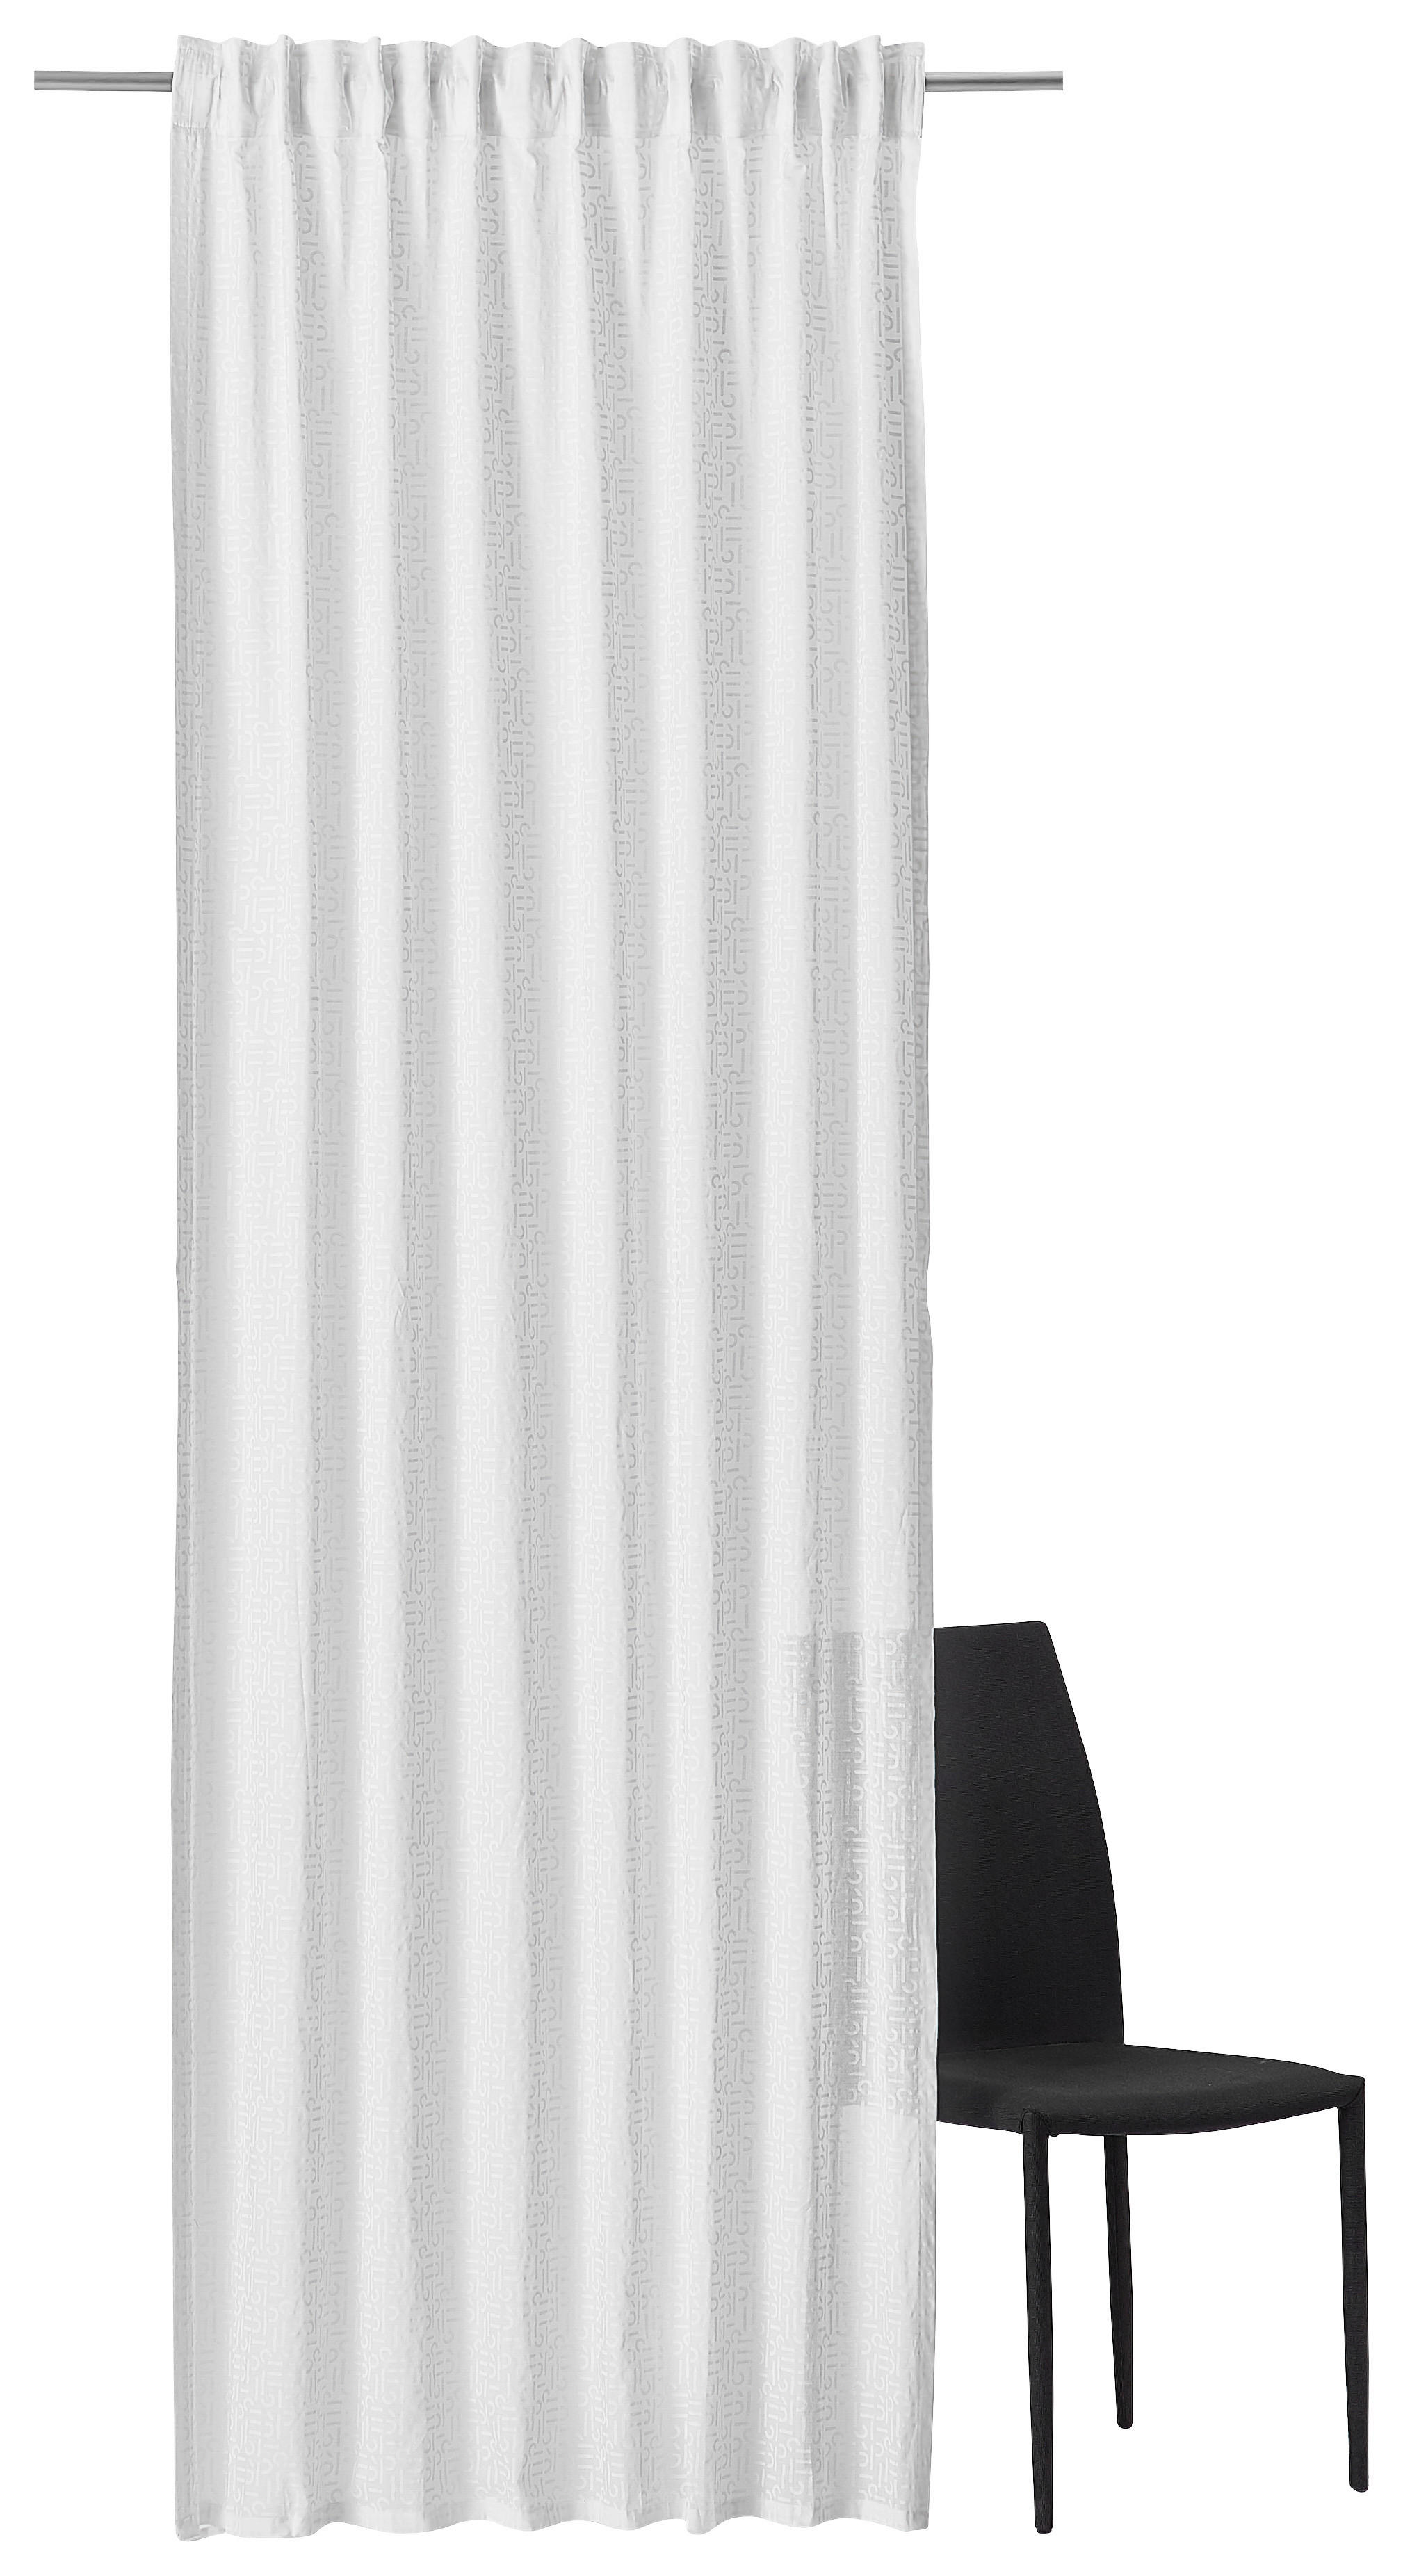 FERTIGVORHANG E-Scatter transparent 130/250 cm   - Weiß, Basics, Textil (130/250cm) - Esprit